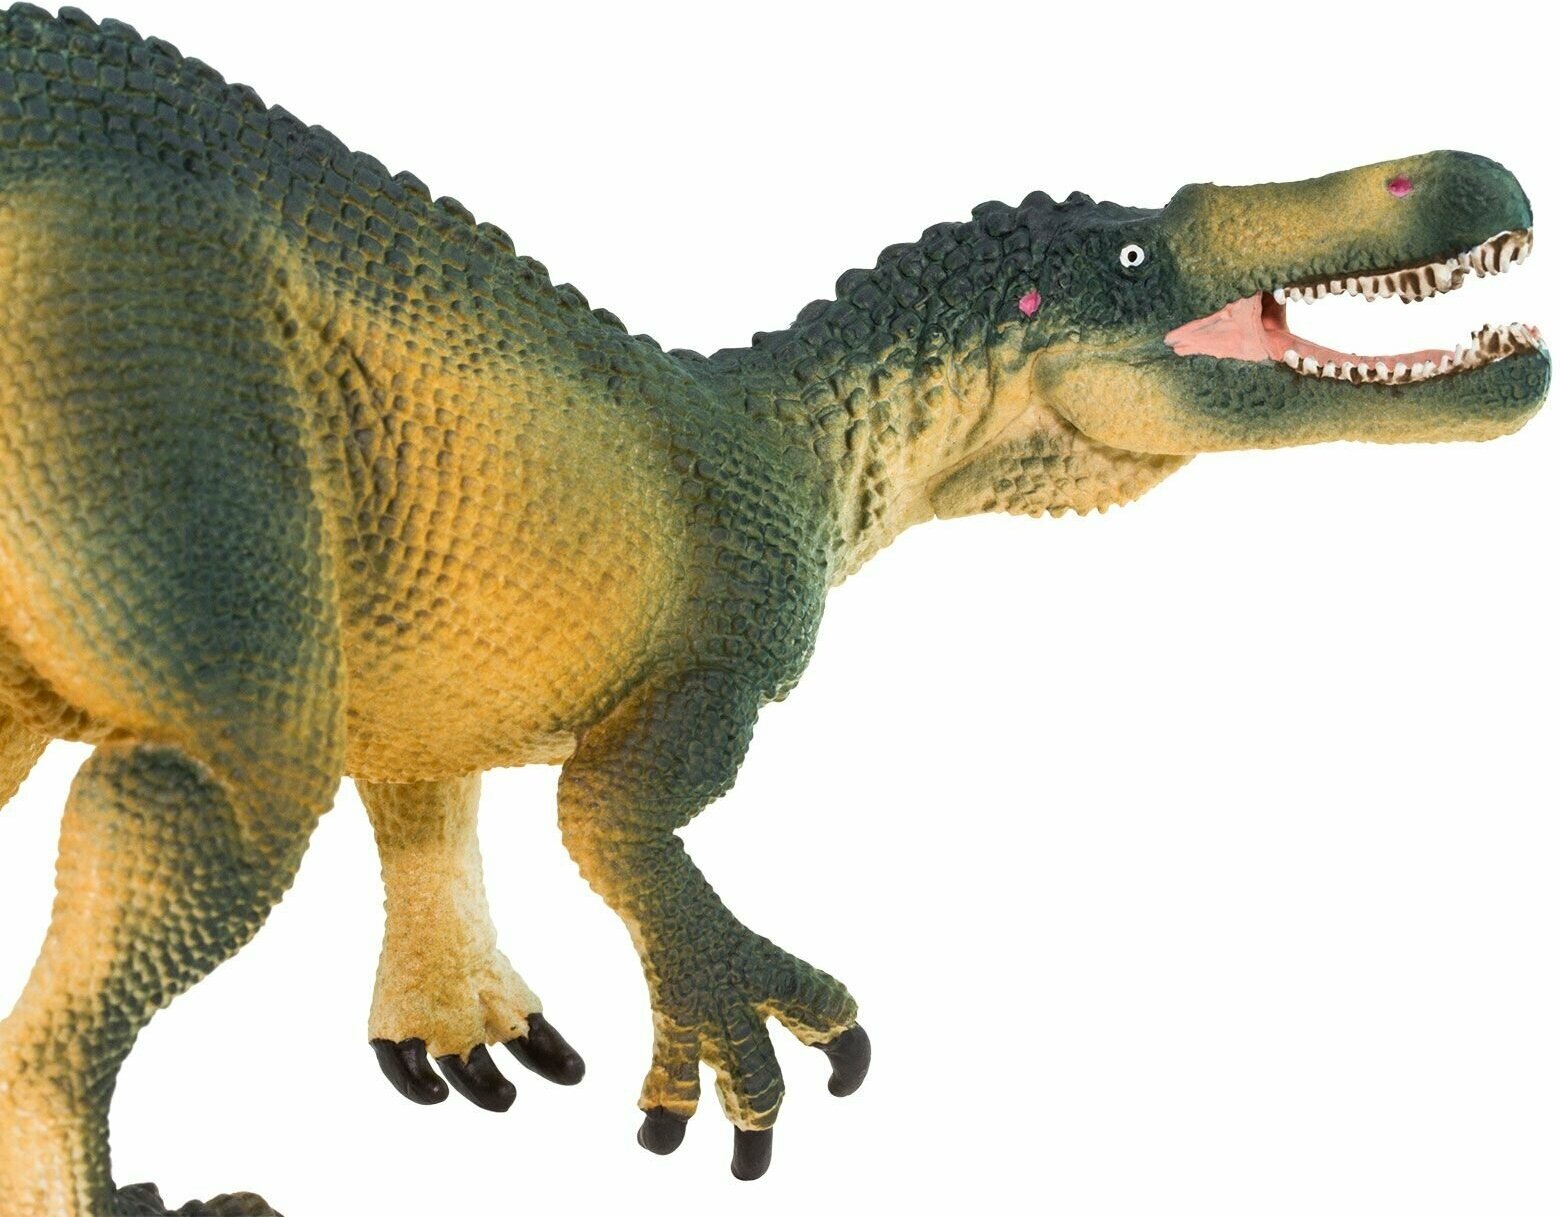 Фигурка животного динозавра Safari Ltd Зухомим, для детей, игрушка коллекционная, 302929